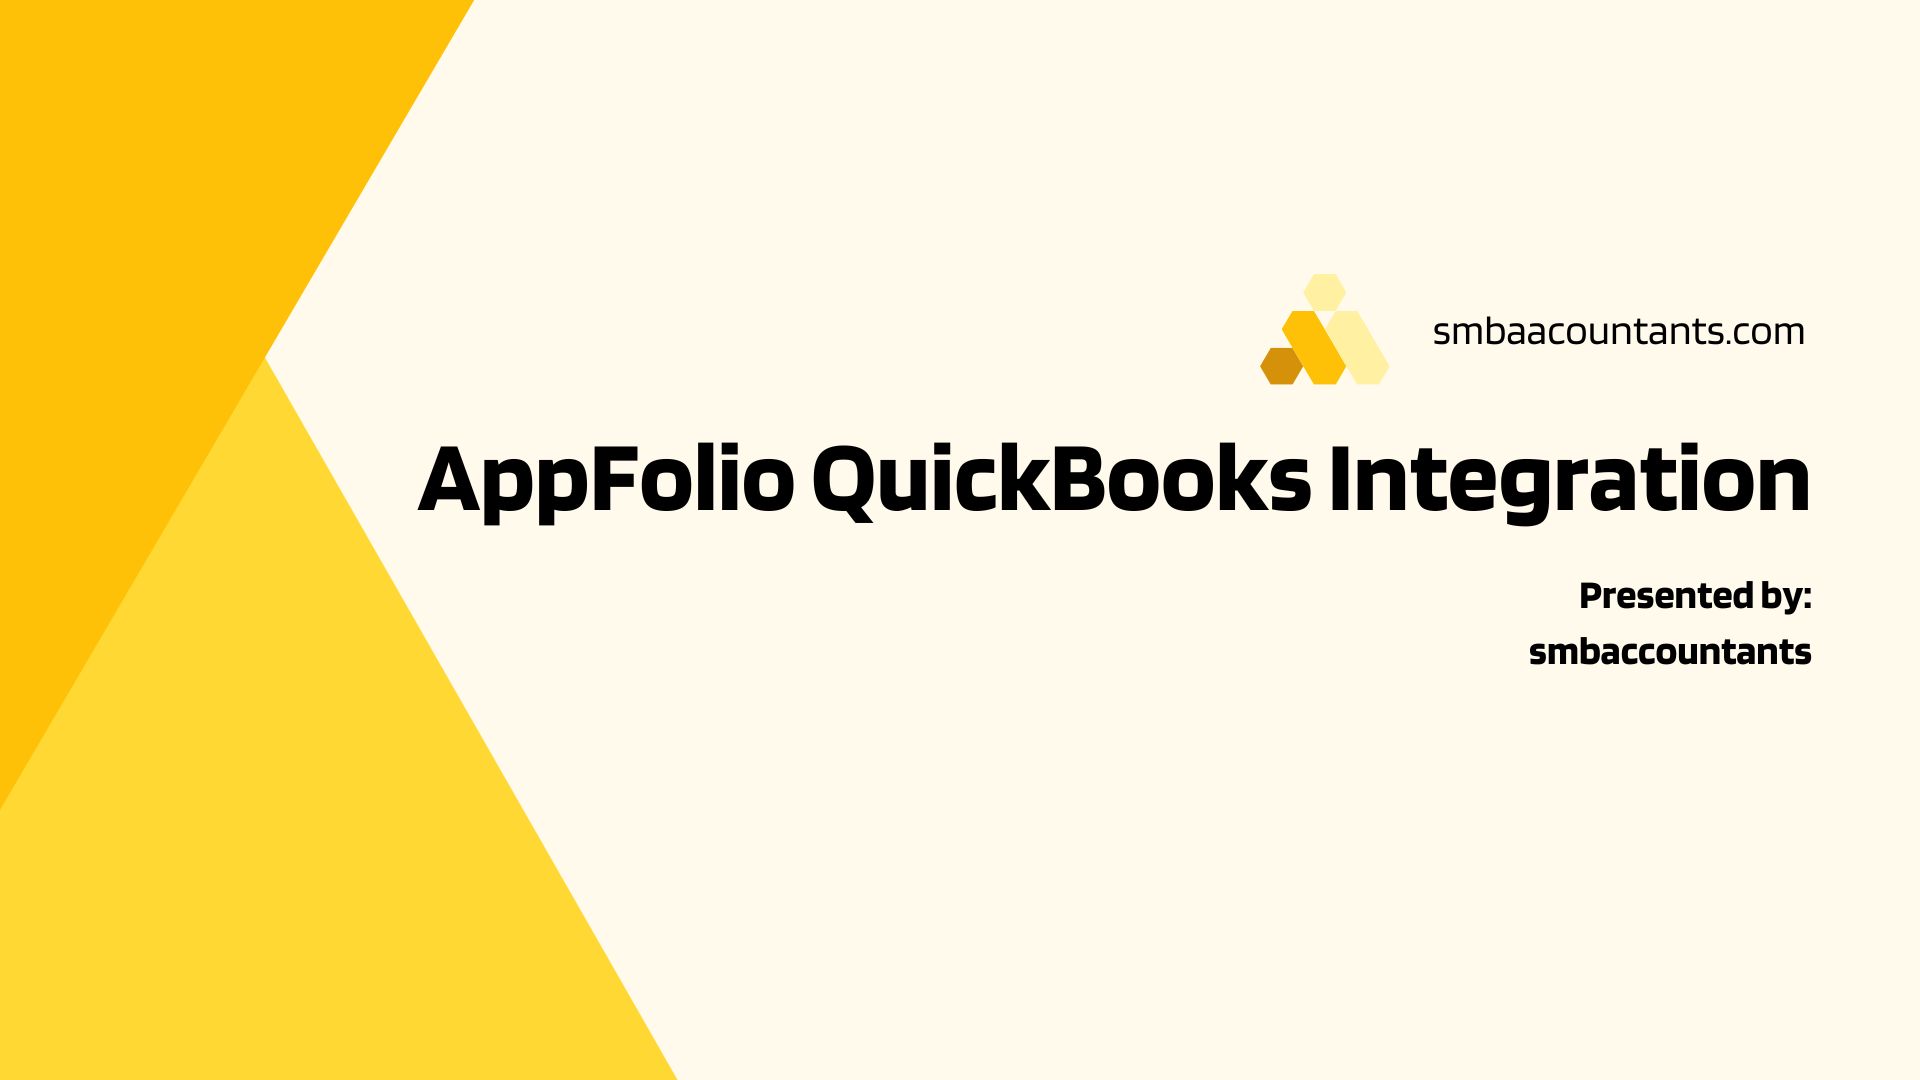 Streamline Operations with QuickBooks AppFolio Integration